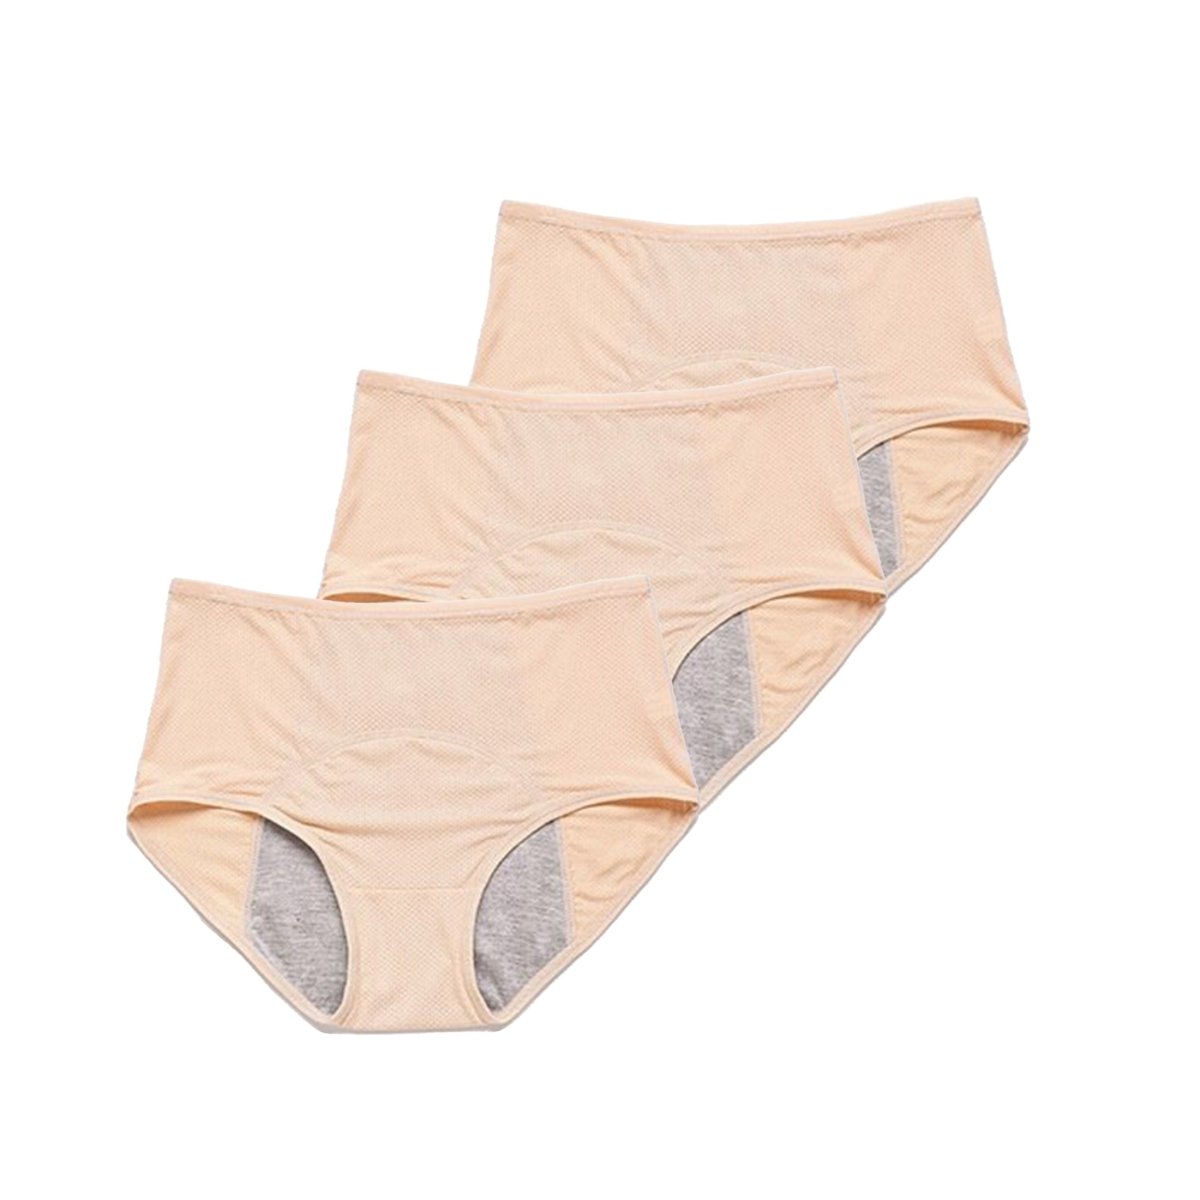 Leakproof Underwear, 3 Pack, Multiple Color Options